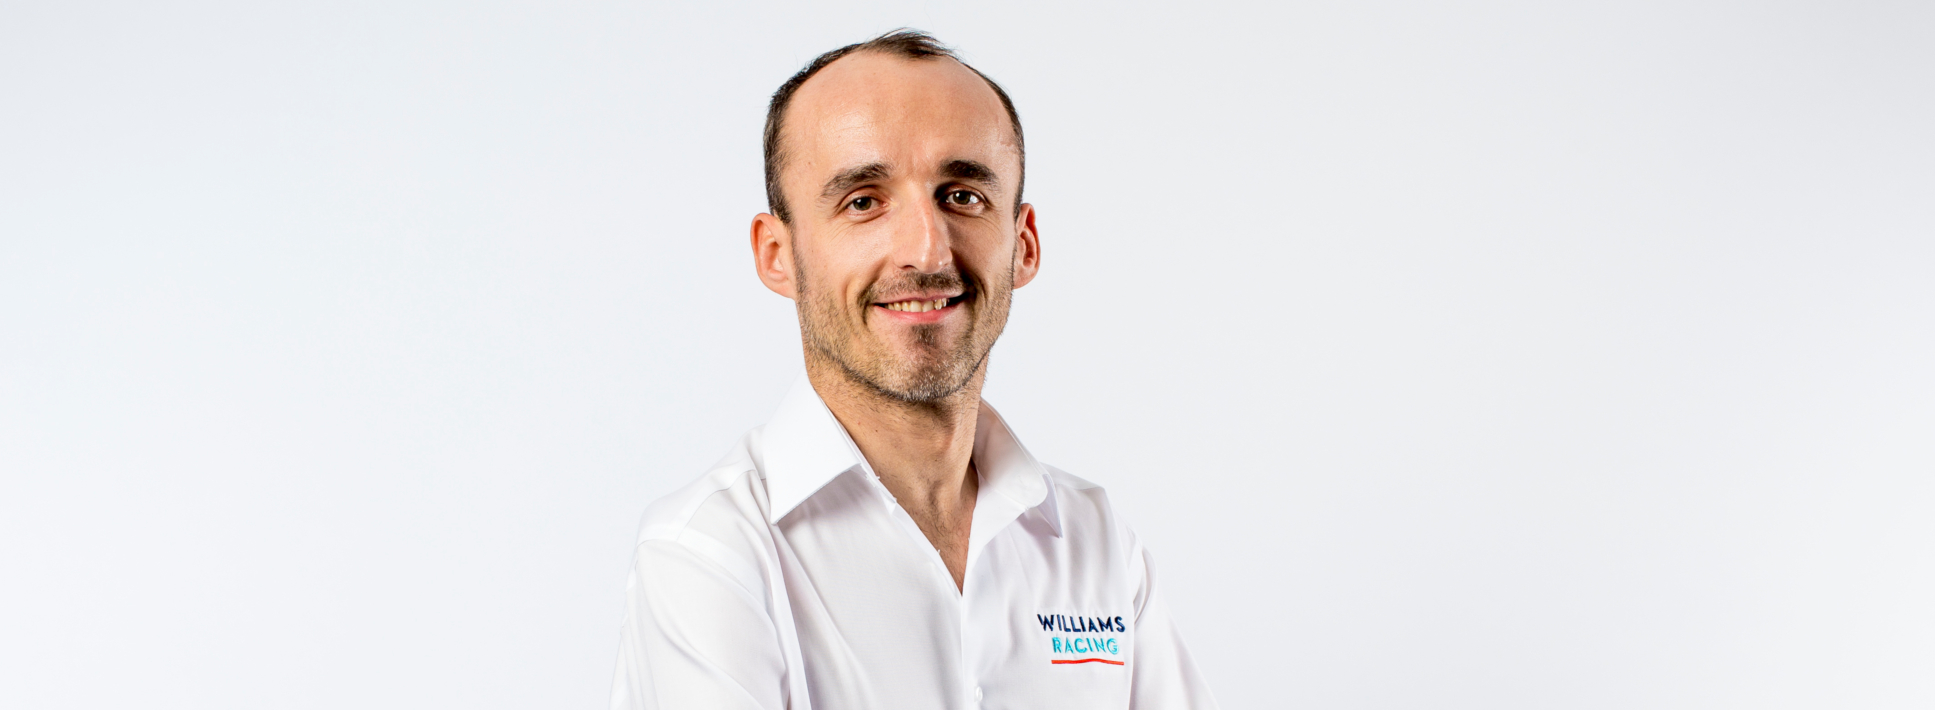 OFICIAL: Robert Kubica será piloto titular de Williams en 2019